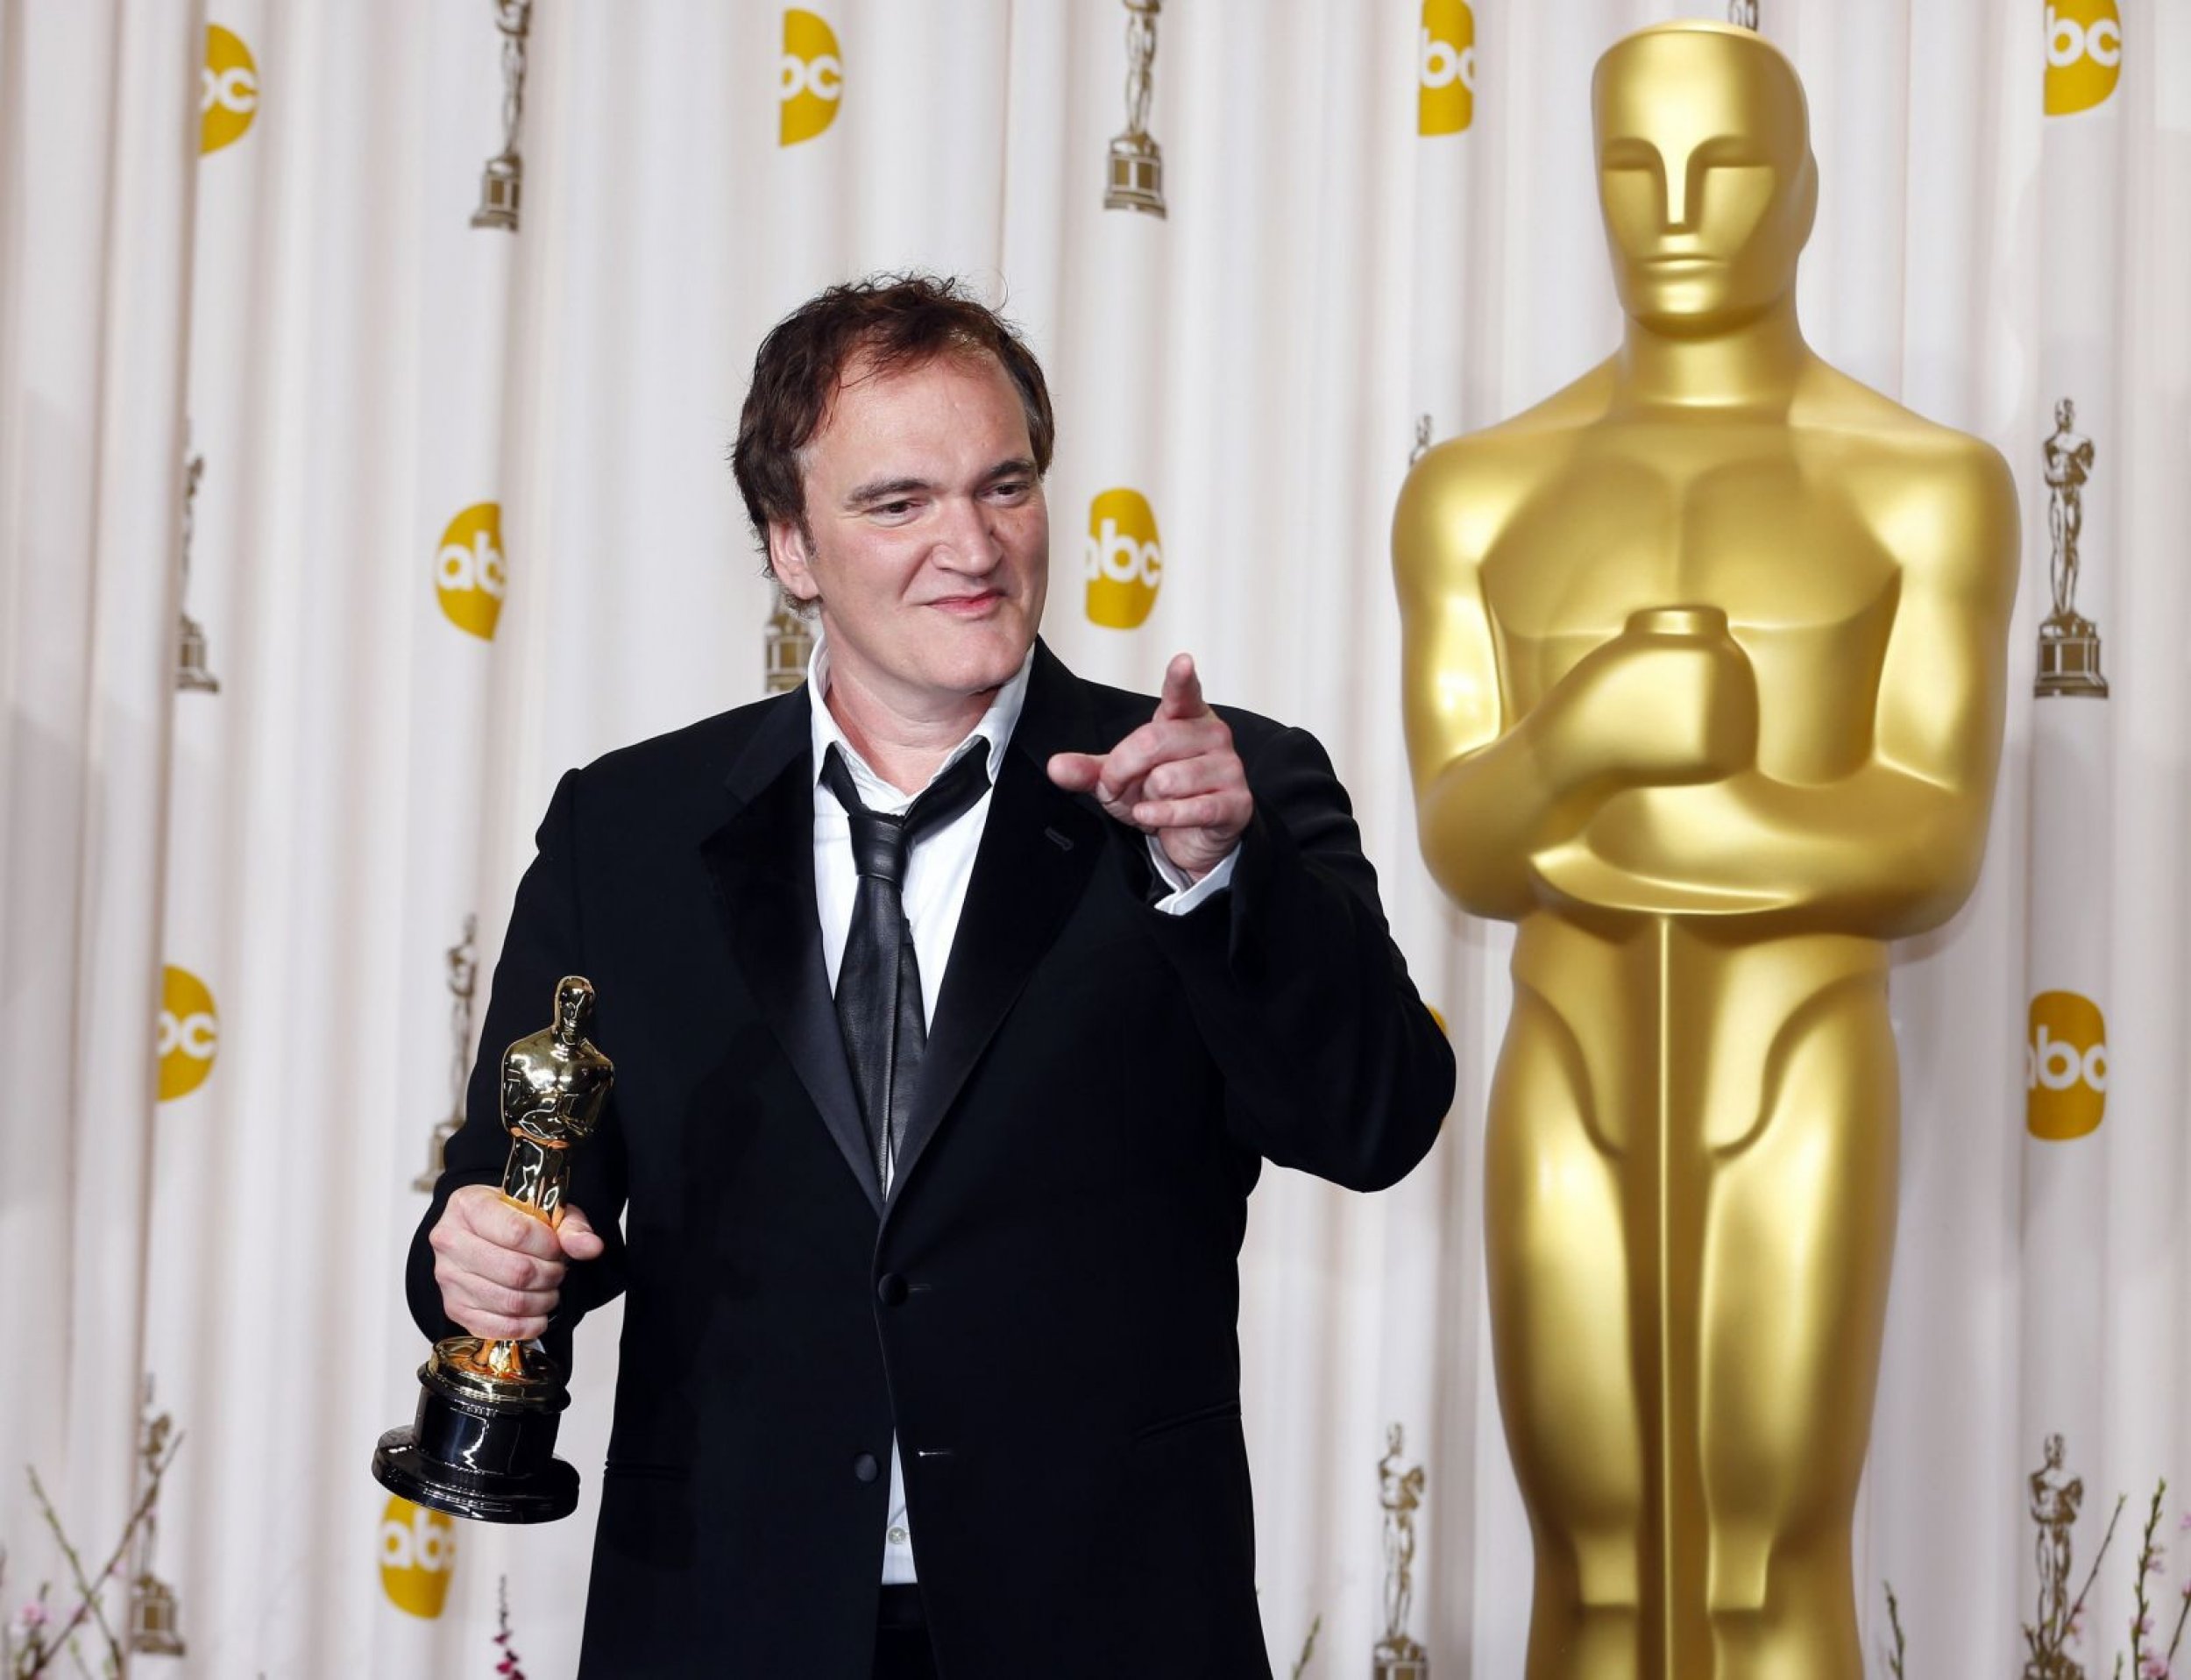 Ang Lee, Tarantino Waltz, Talk Oscar Wins Backstage 